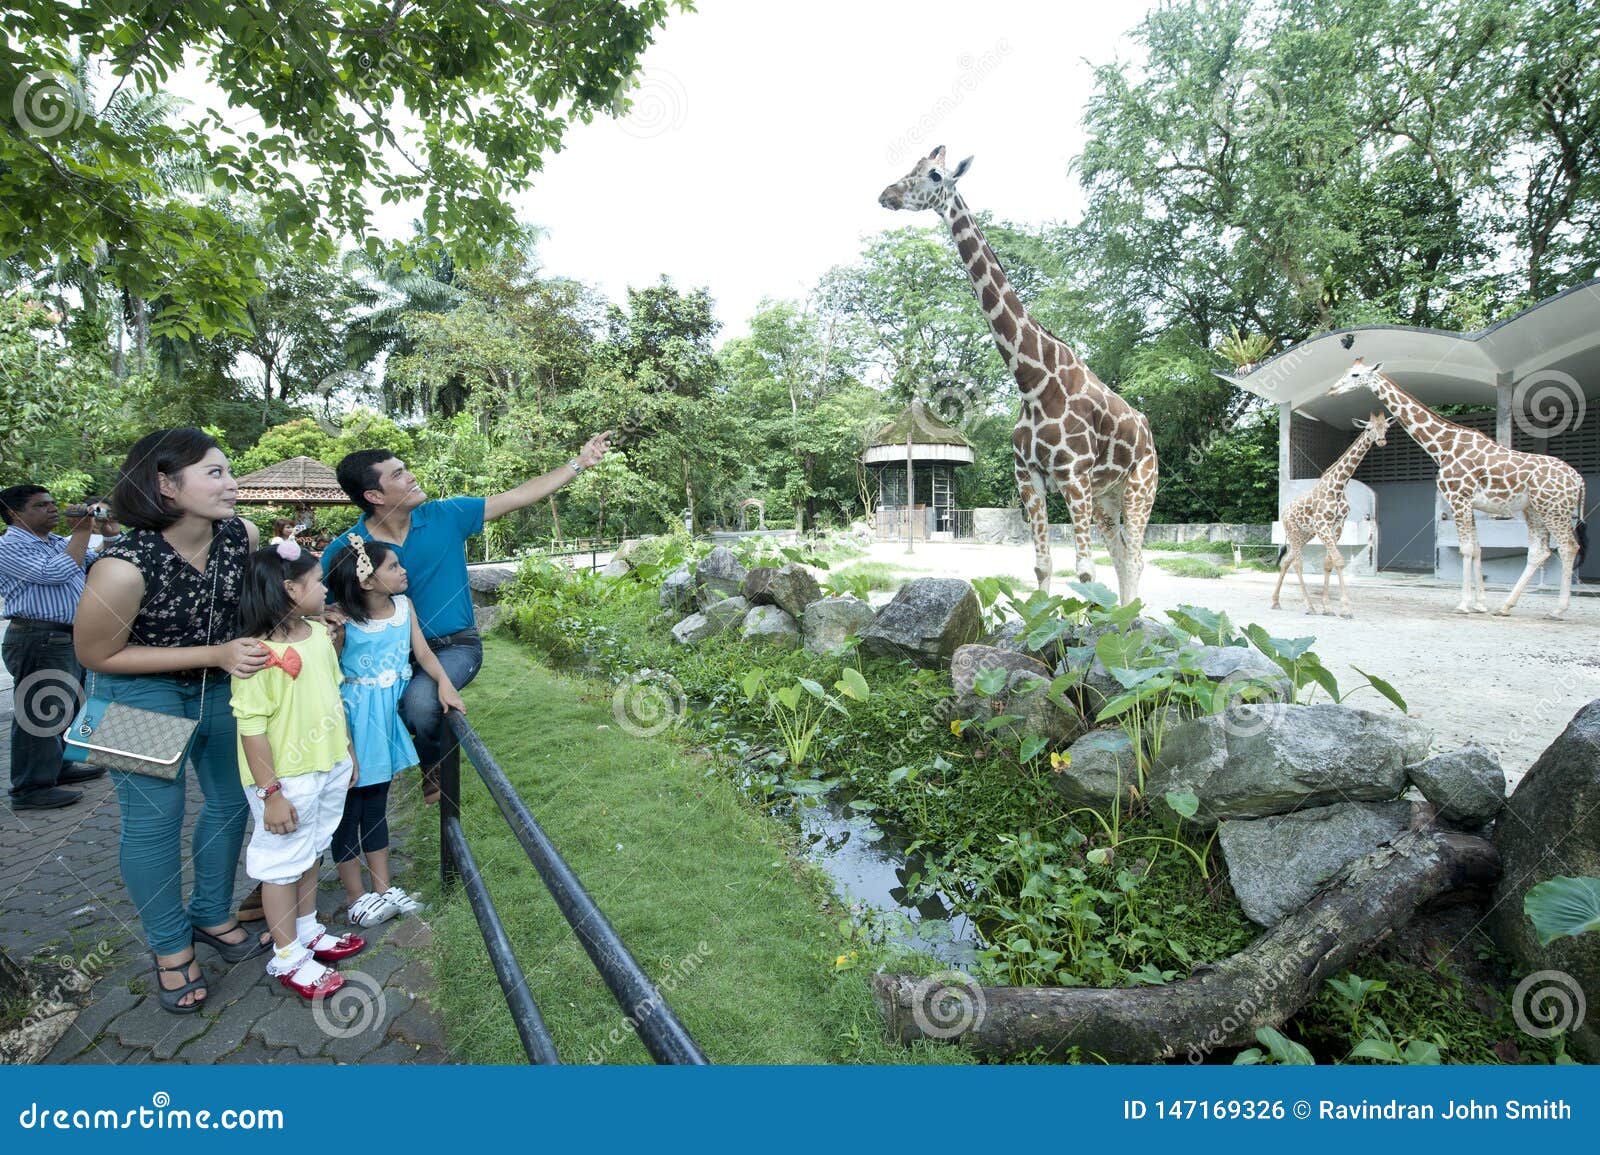 Zoo malaysia national of Zoo Negara